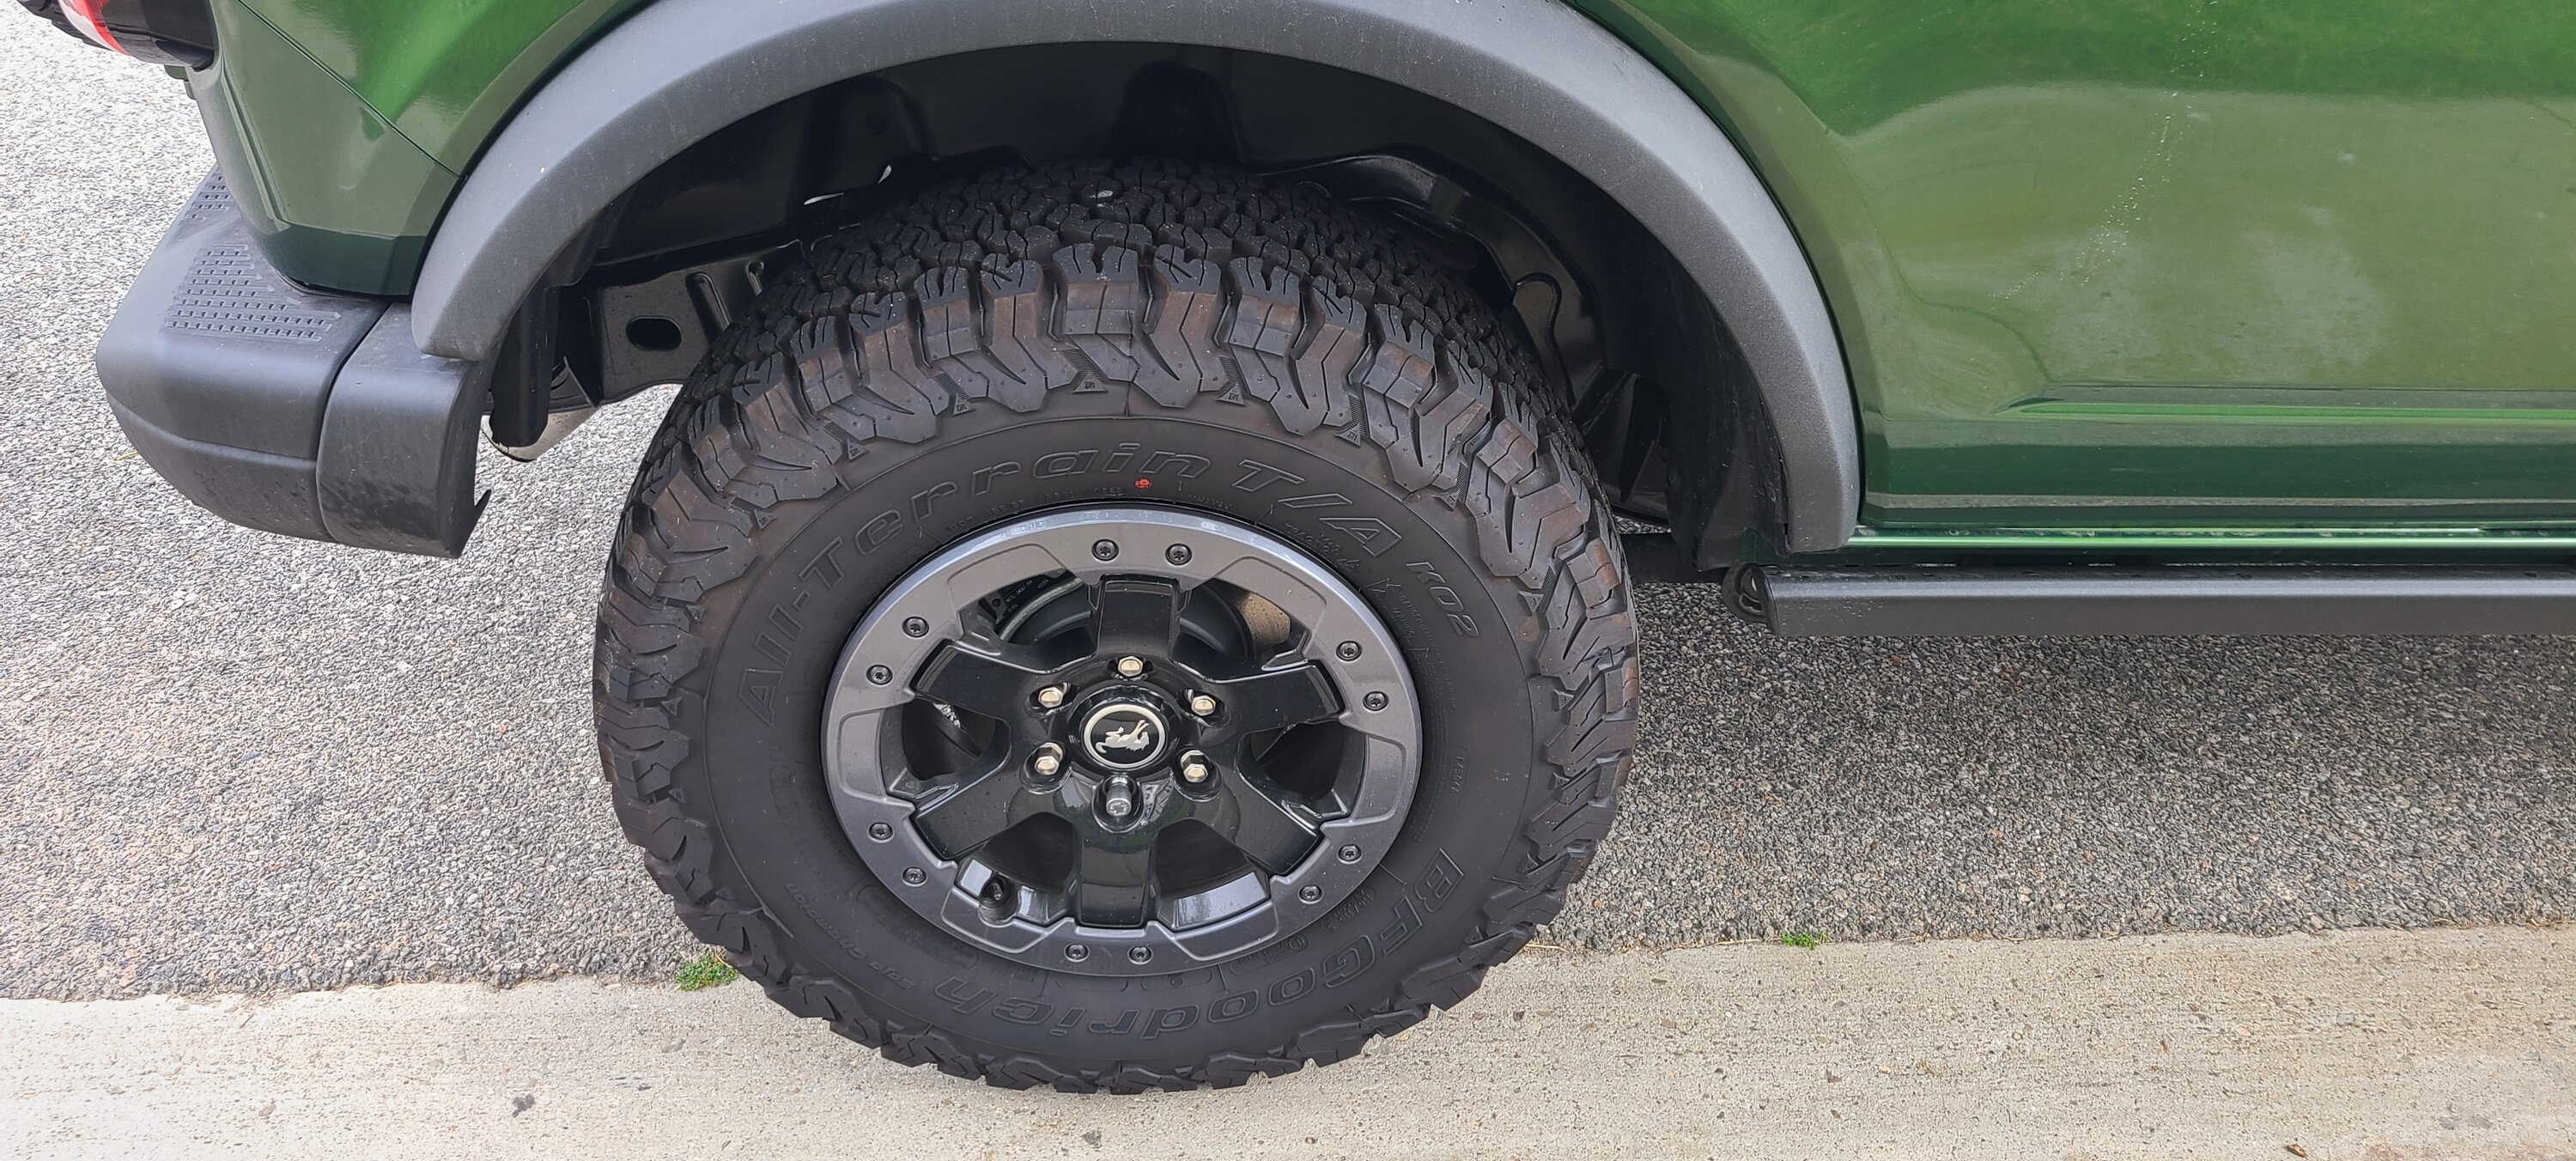 Ford Bronco Badlands Optional Wheels & Tires, Beadlock Capable - 33" BFG KO2 - $1200 20230614_083855